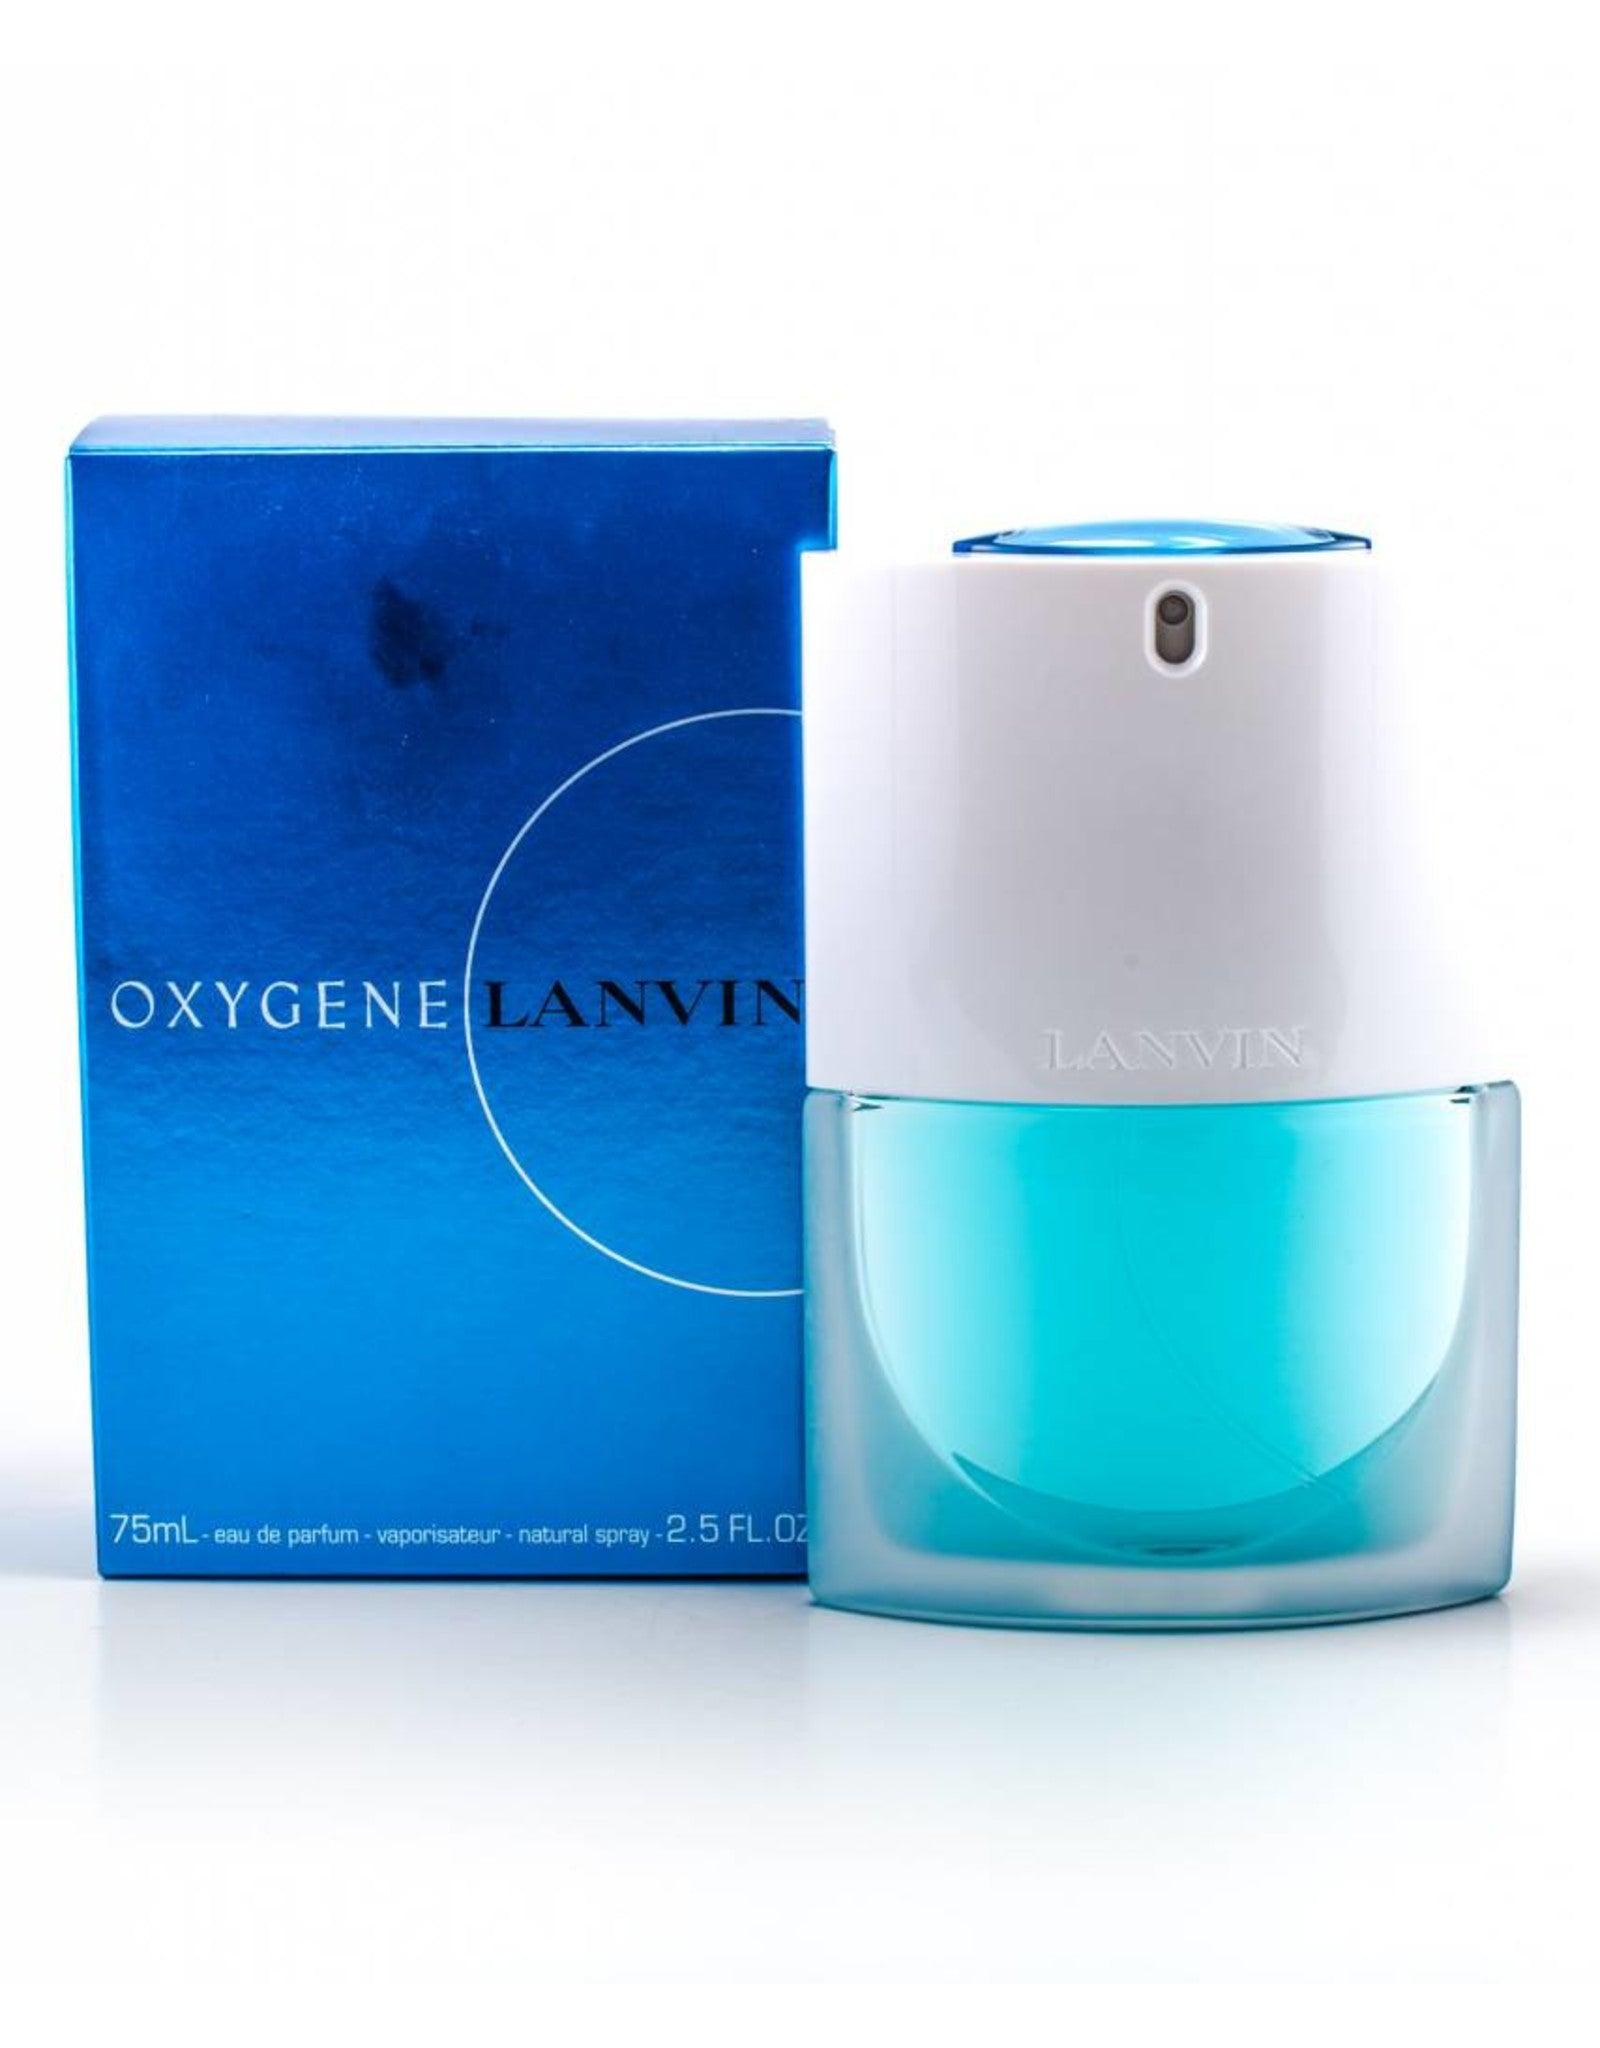 Oxygene - Parfum Gallerie